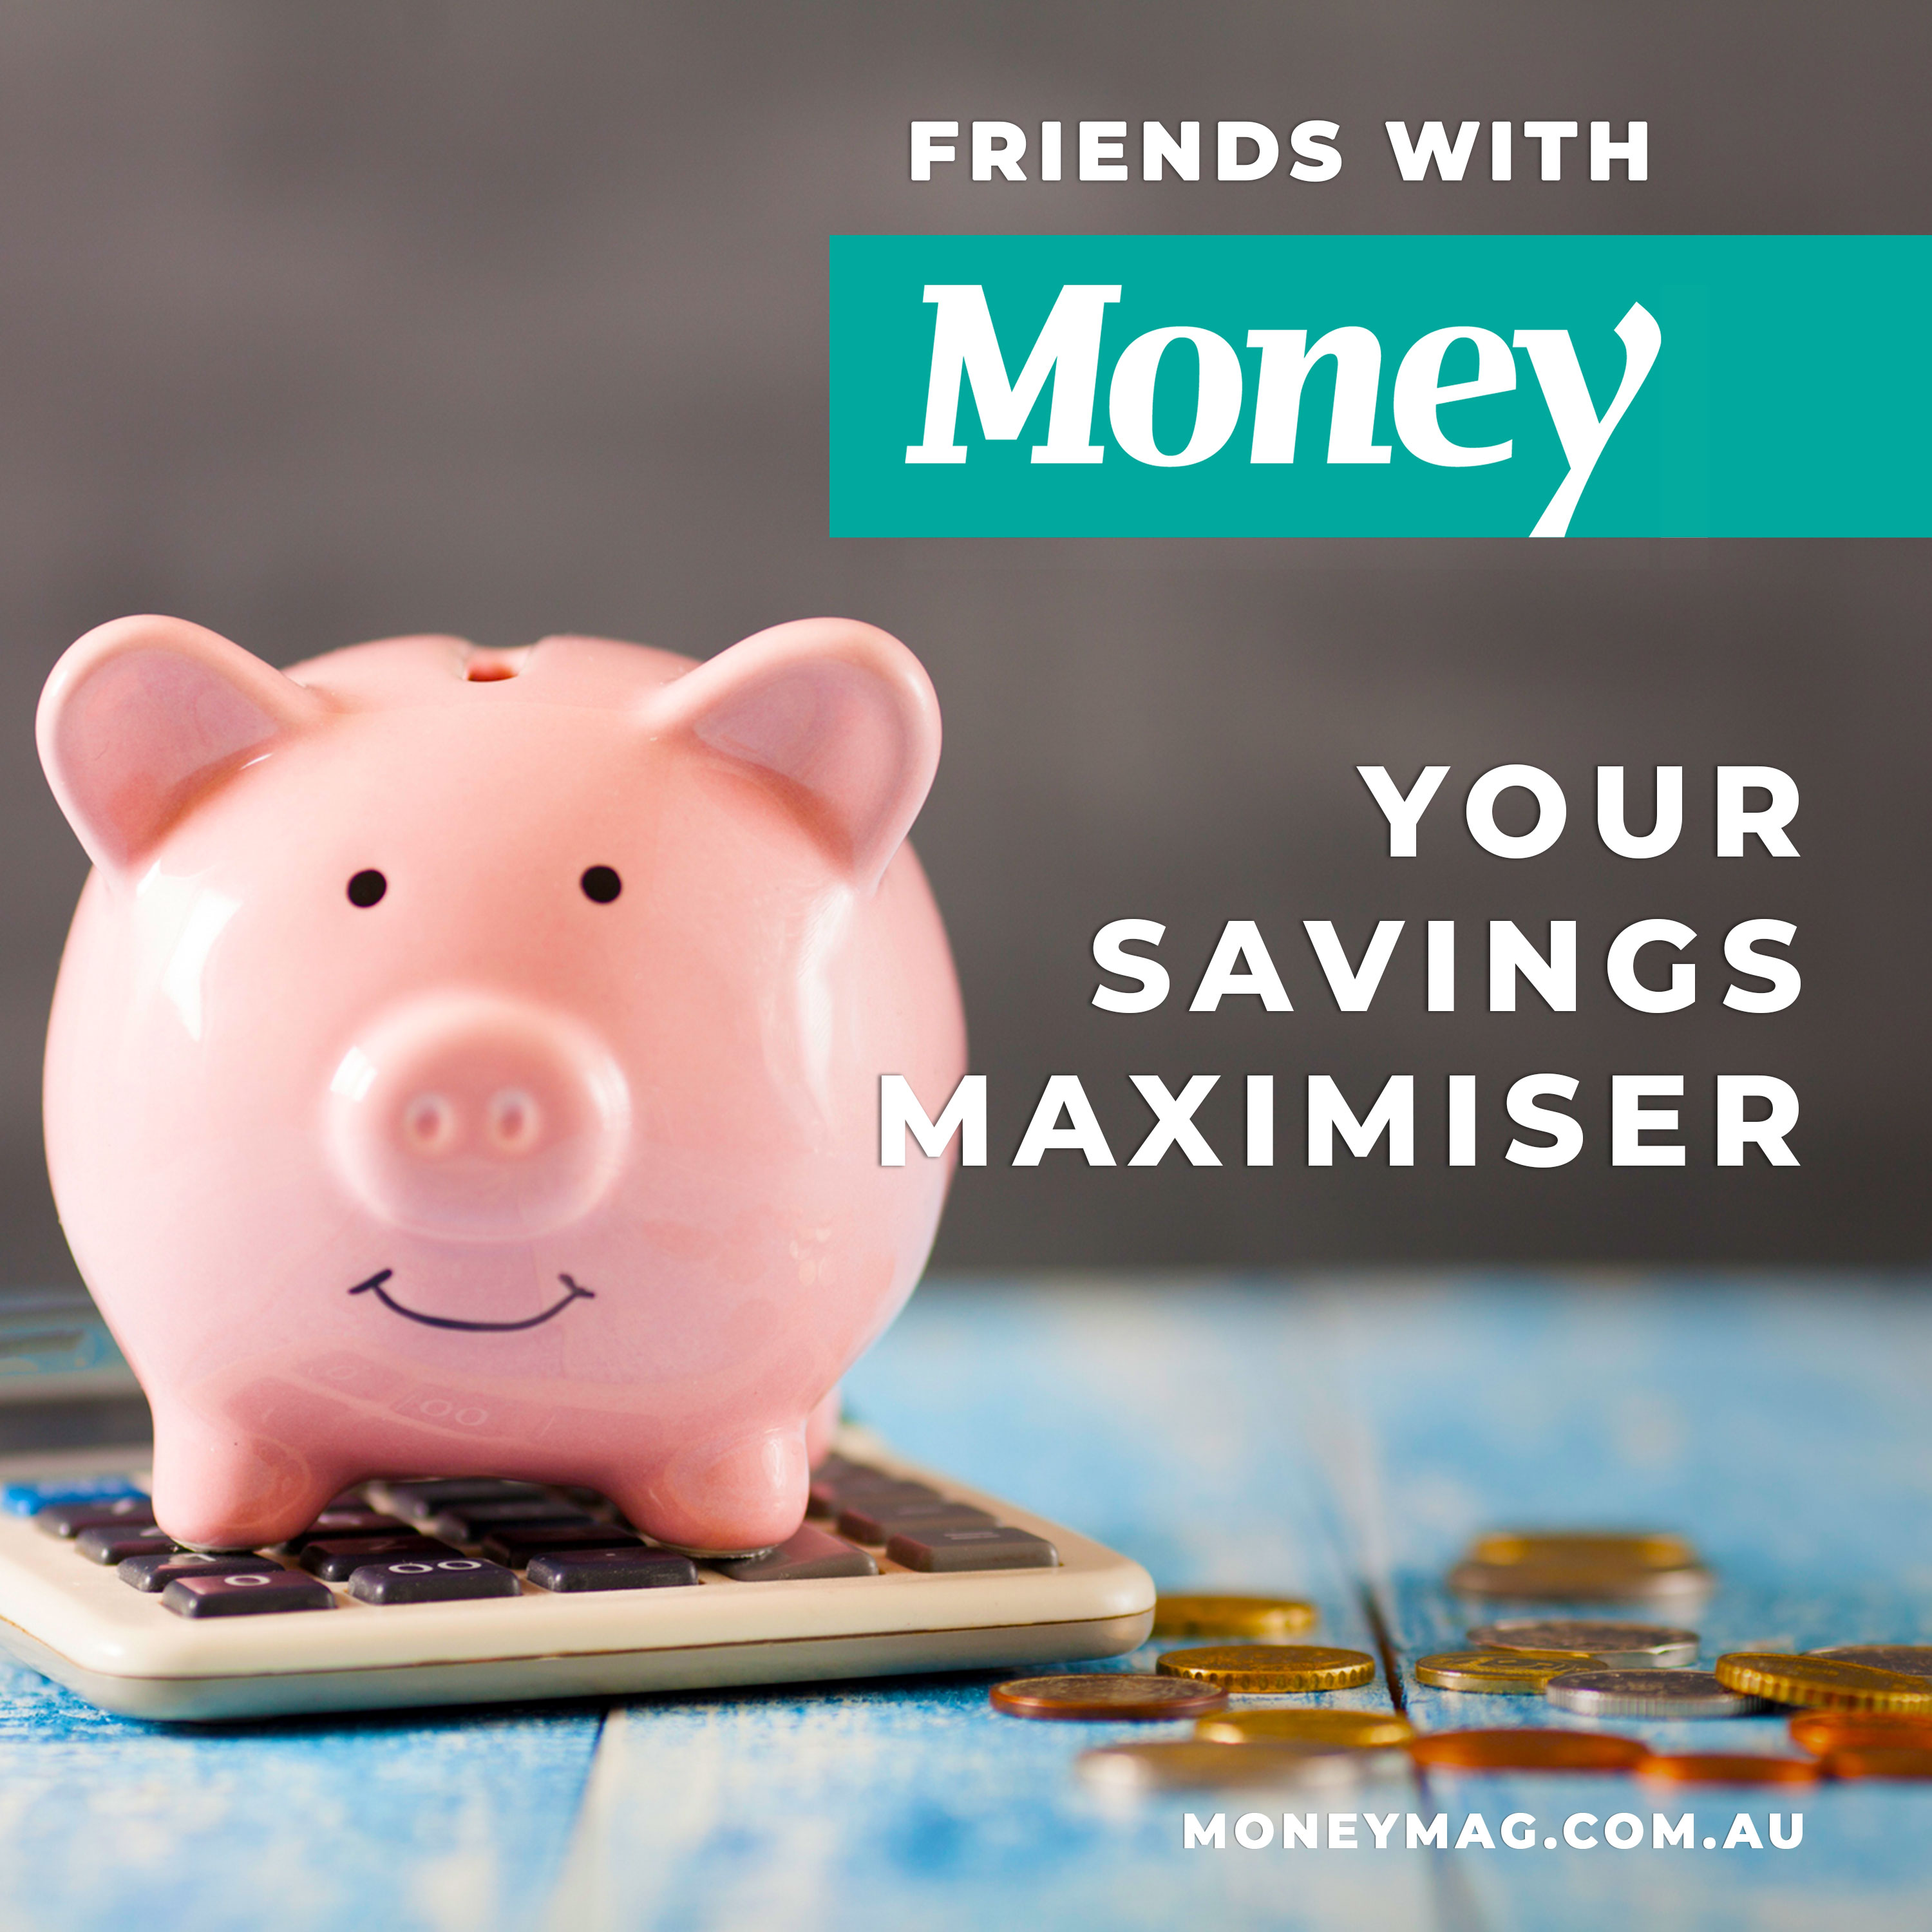 Your savings maximiser